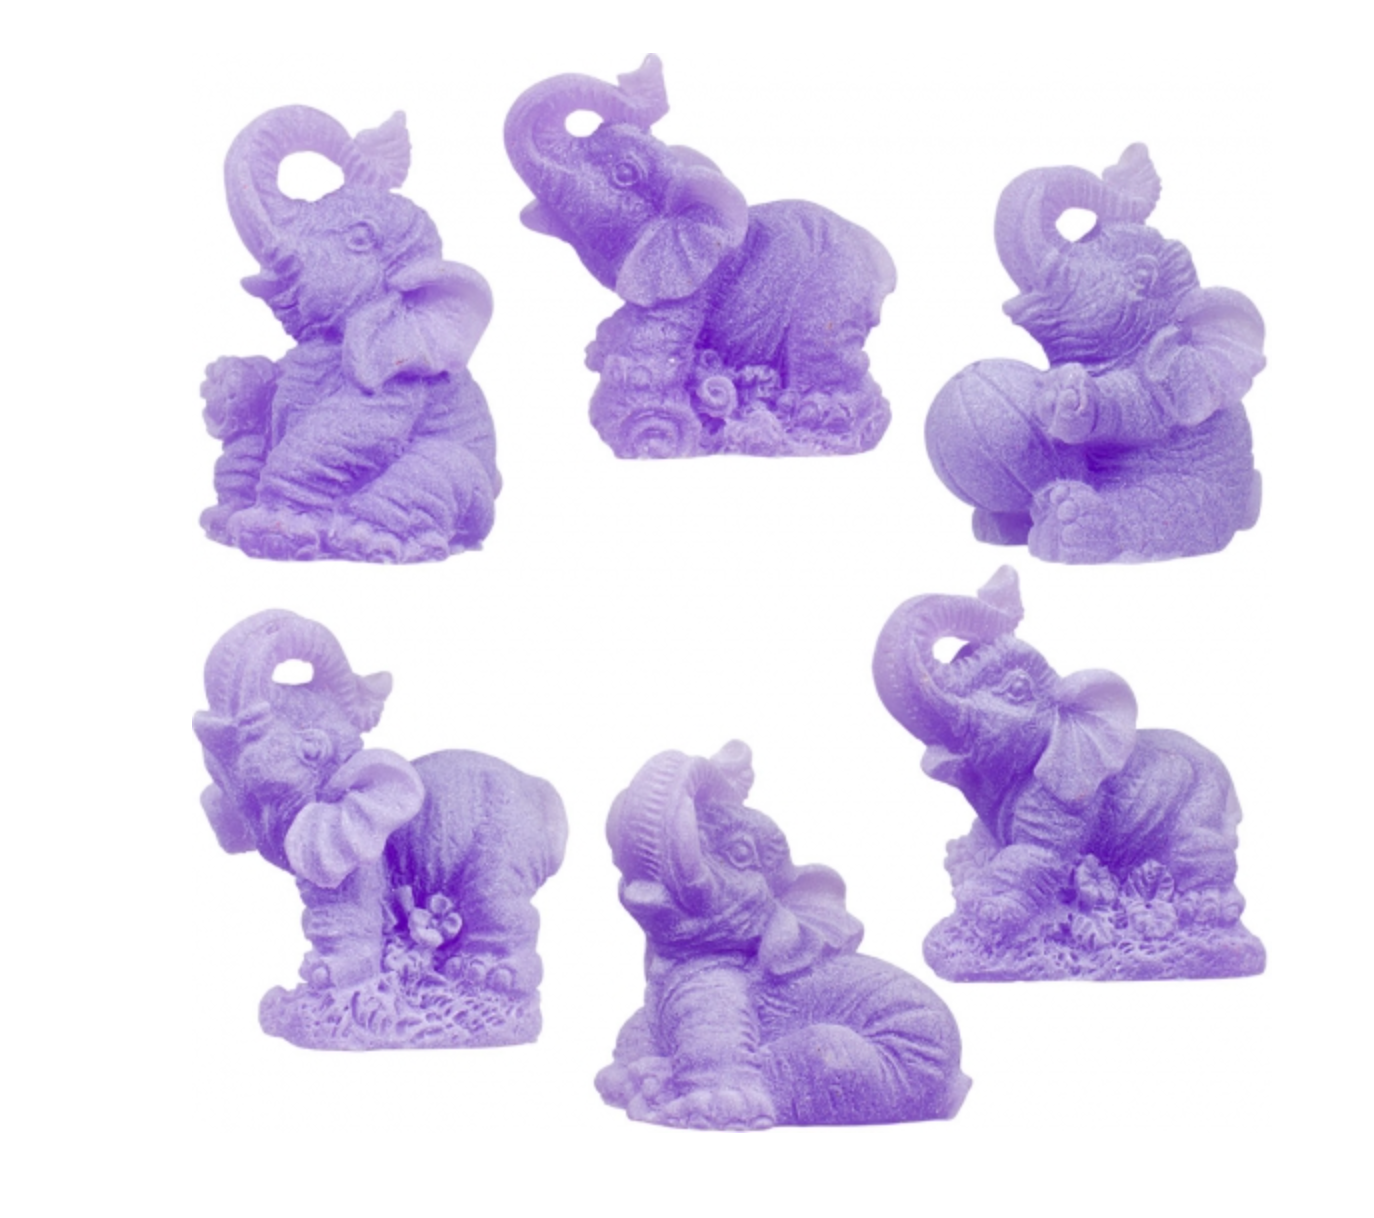 Elephant Figurine - Purple 2"